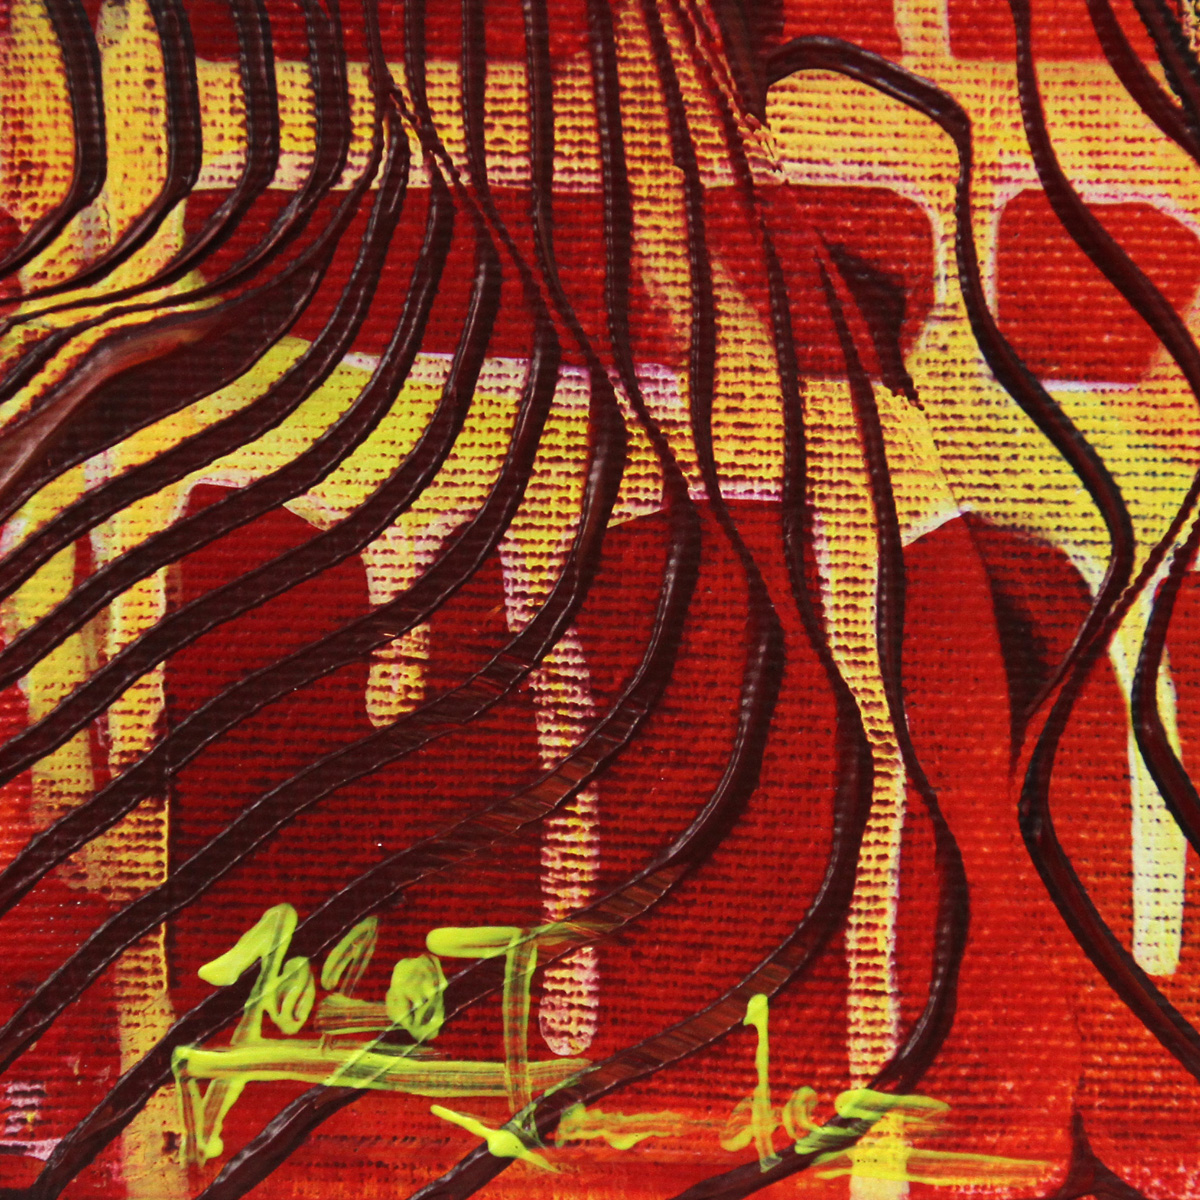 J. Fernandez: "Moving Fire VII", Originalgemälde (Unikat), Acrylbilder